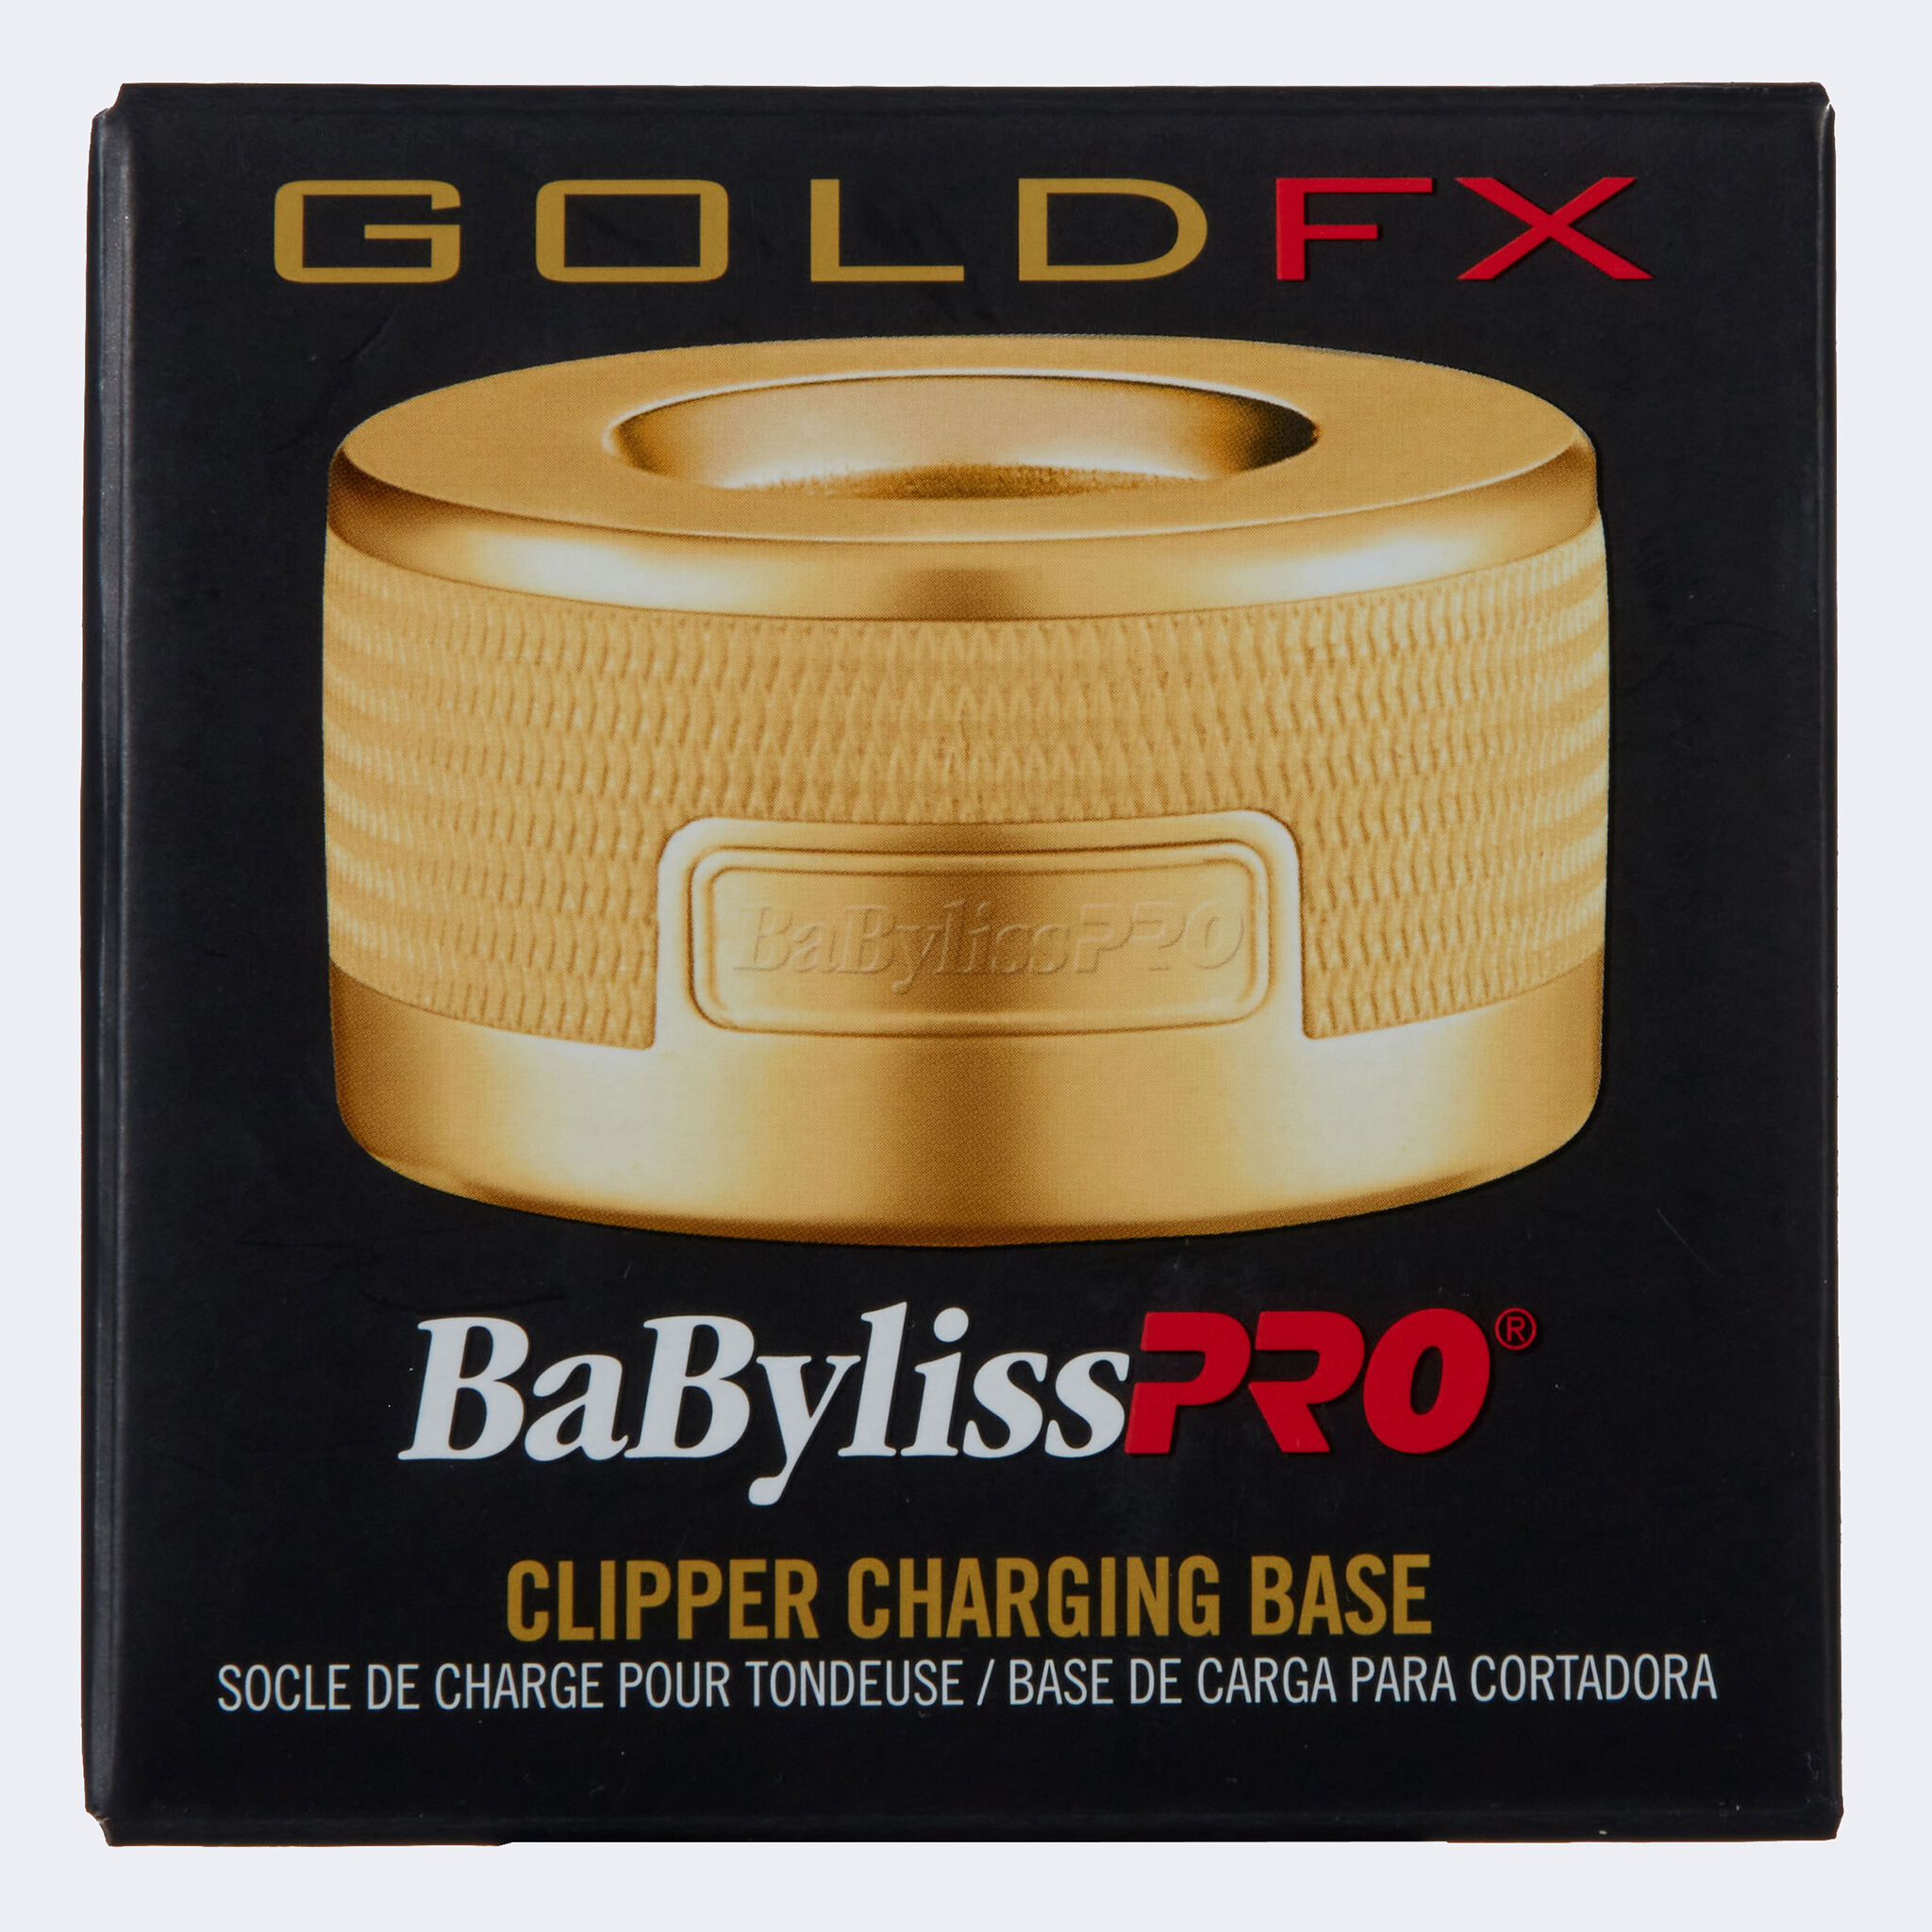 BABYLISS PRO CLIPPER CHARGINGBASE FX870用